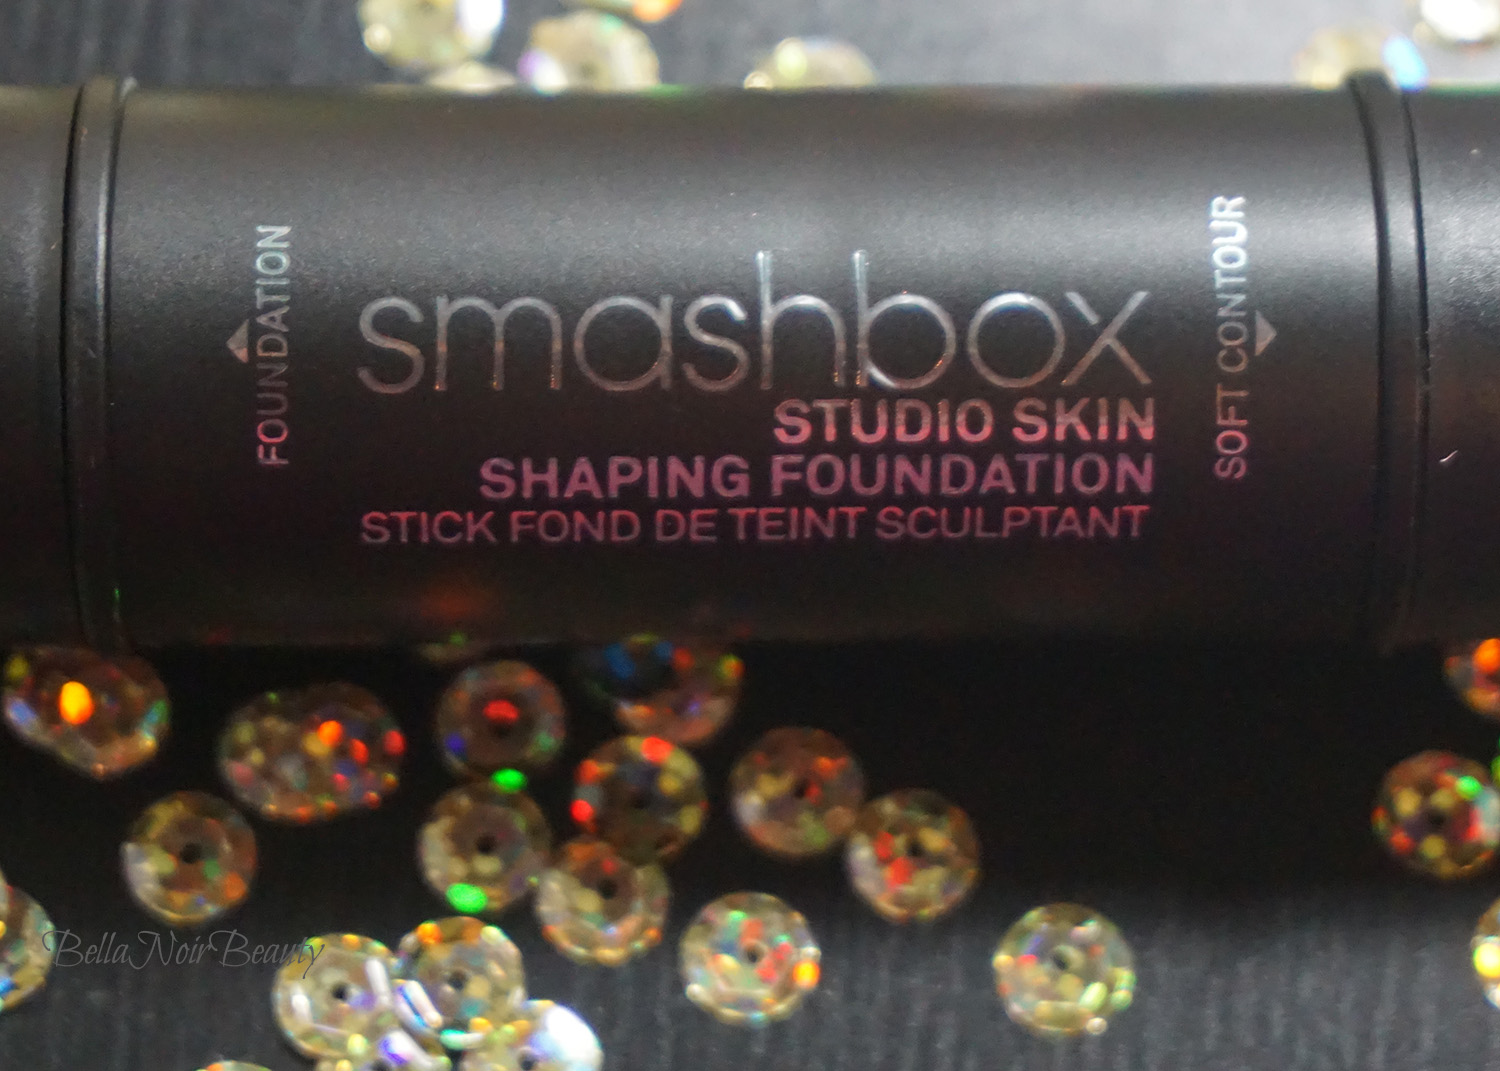 Smashbox Studio Skin Shaping Foundation (Shade 4.2) | bellanoirbeauty.com